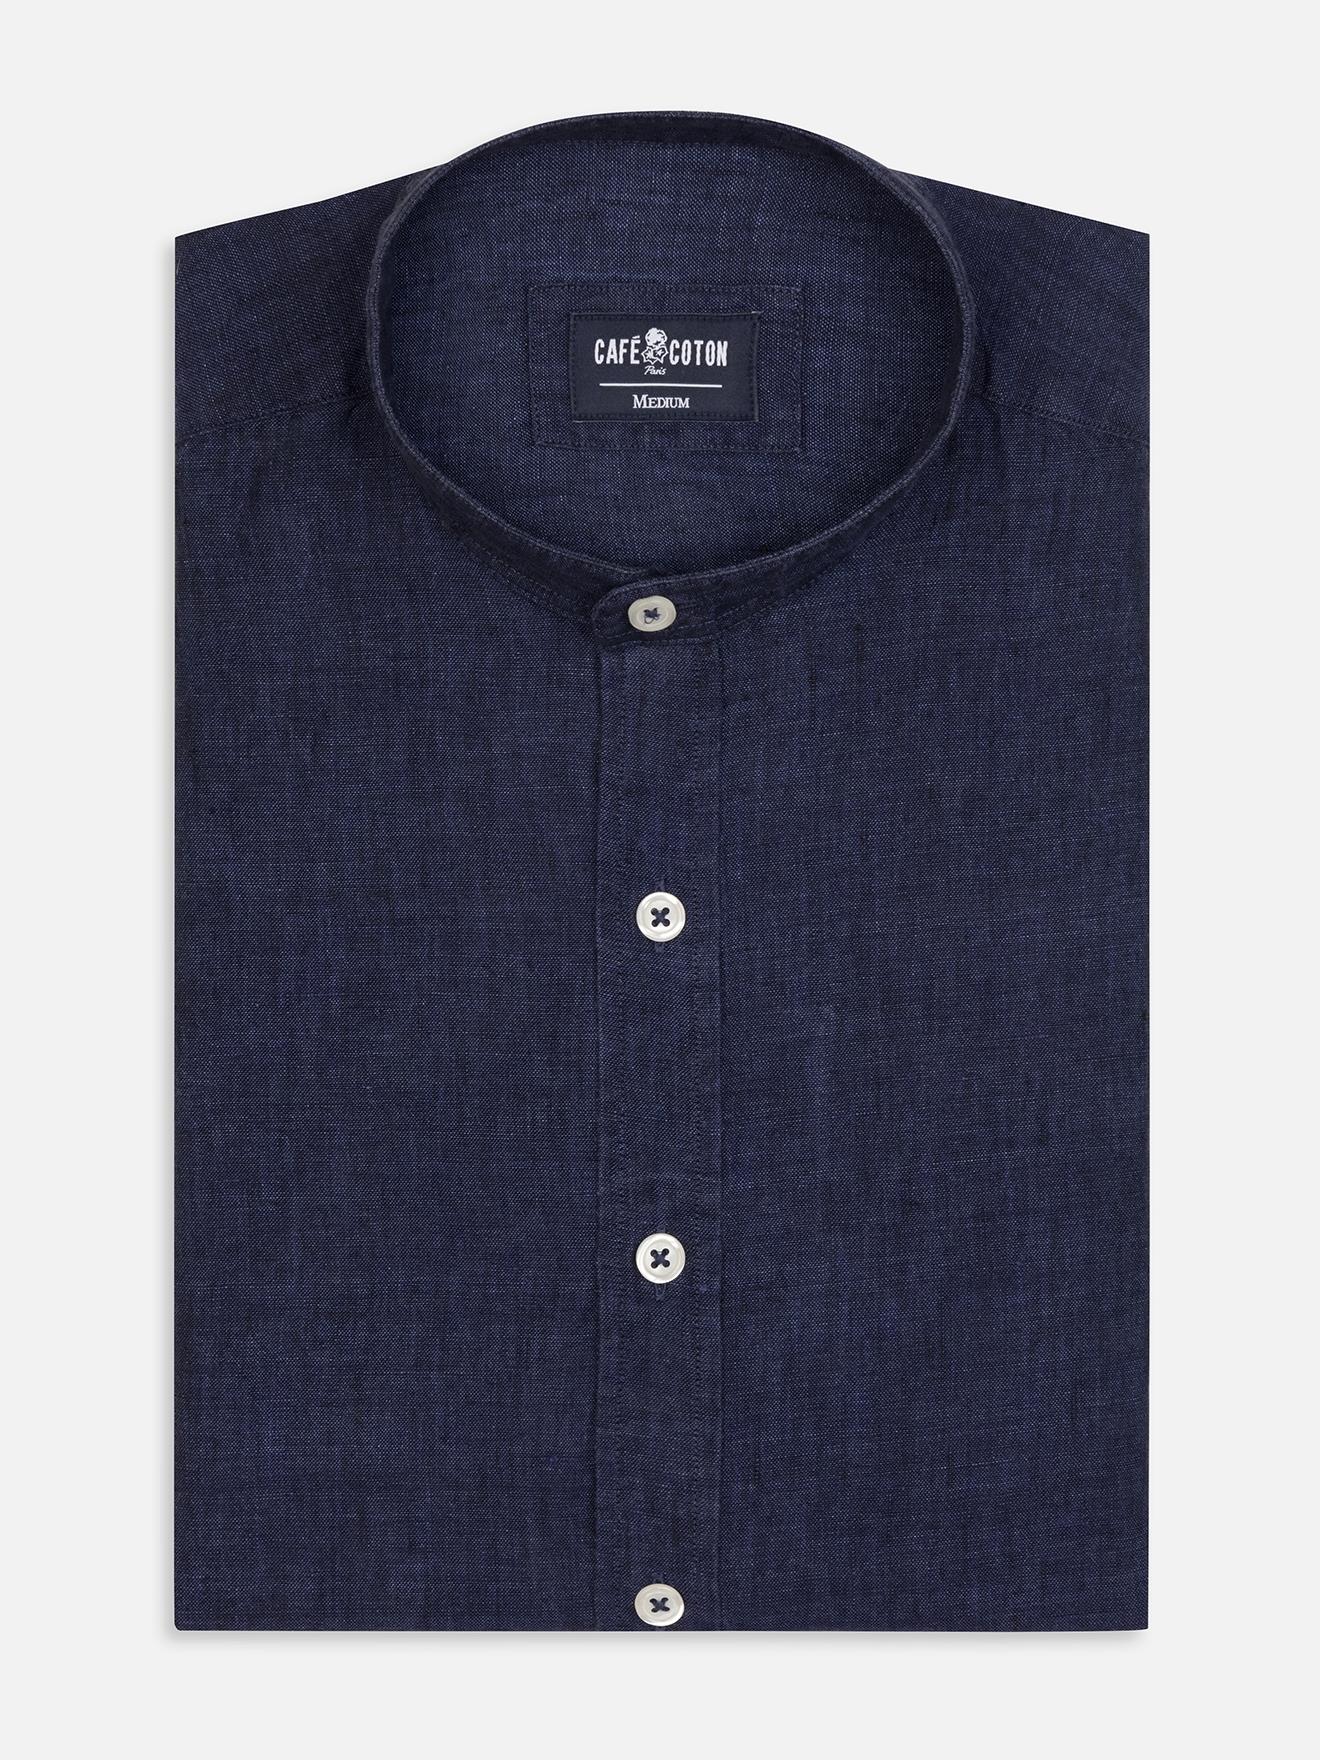 Olaf collarless shirt in navy linen - Navy - Linen - Male